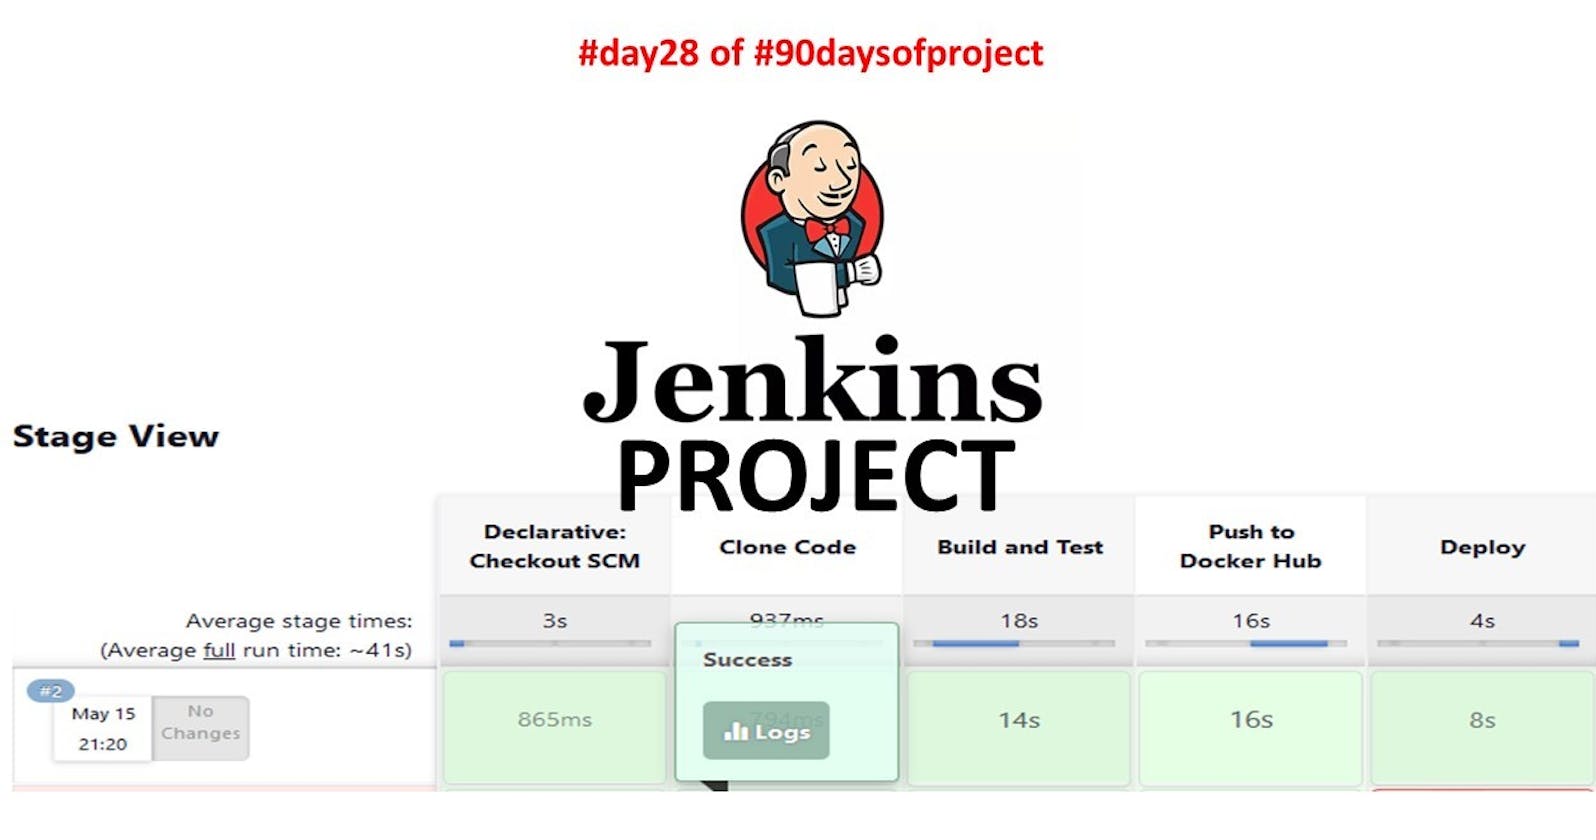 Jenkins Project